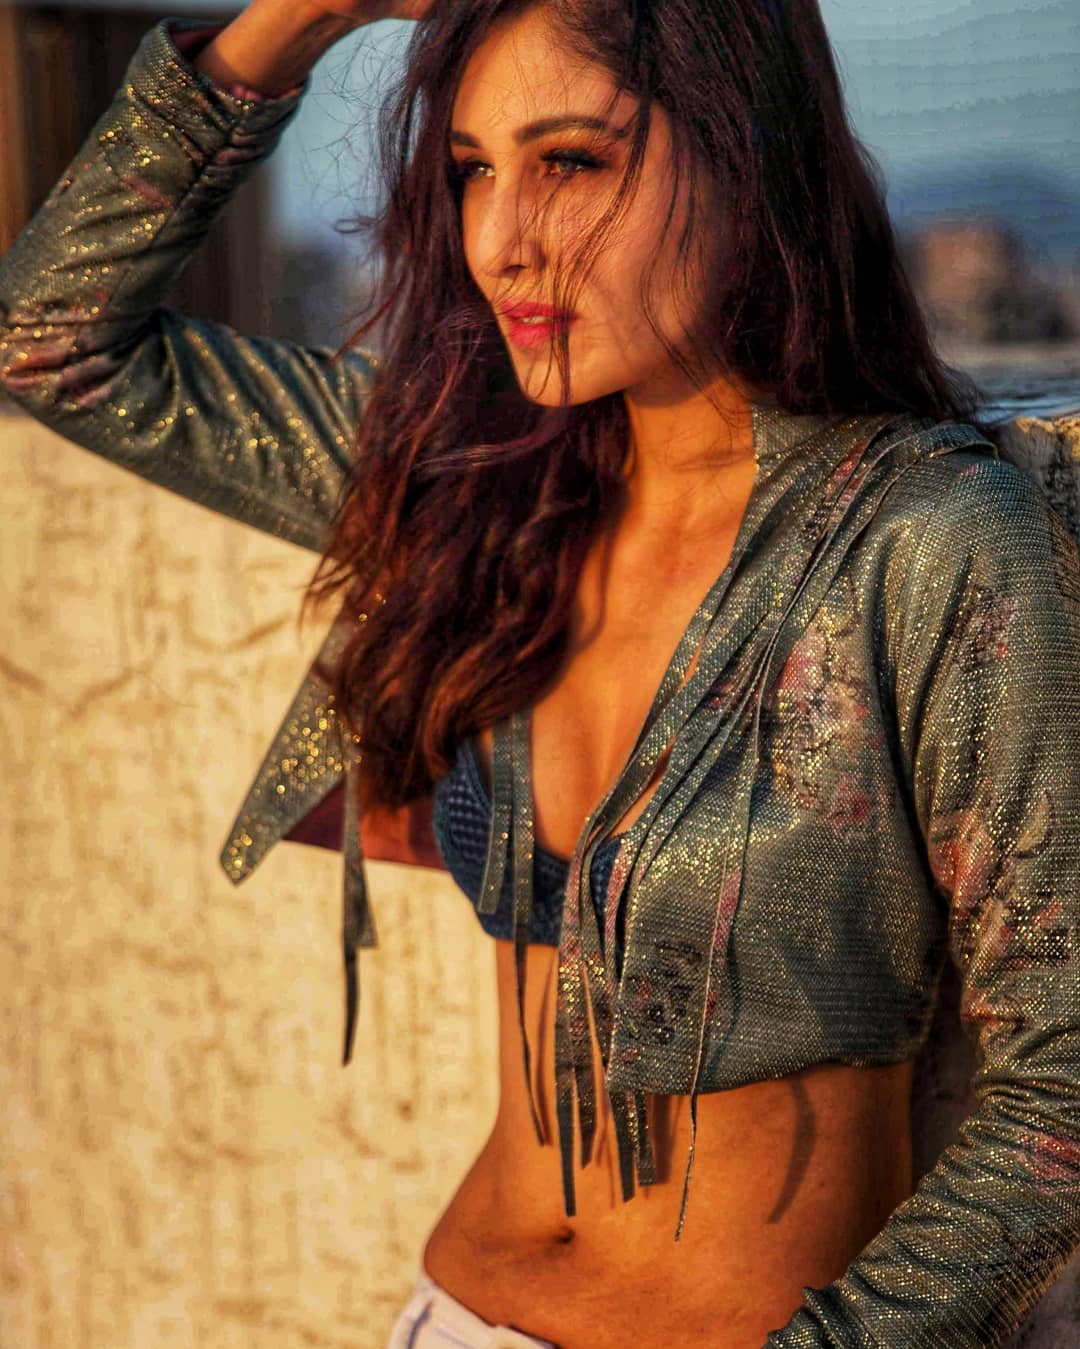 PICS Commando actress Pooja Chopra is a bikini stunner and her Instagram uploads prove the same